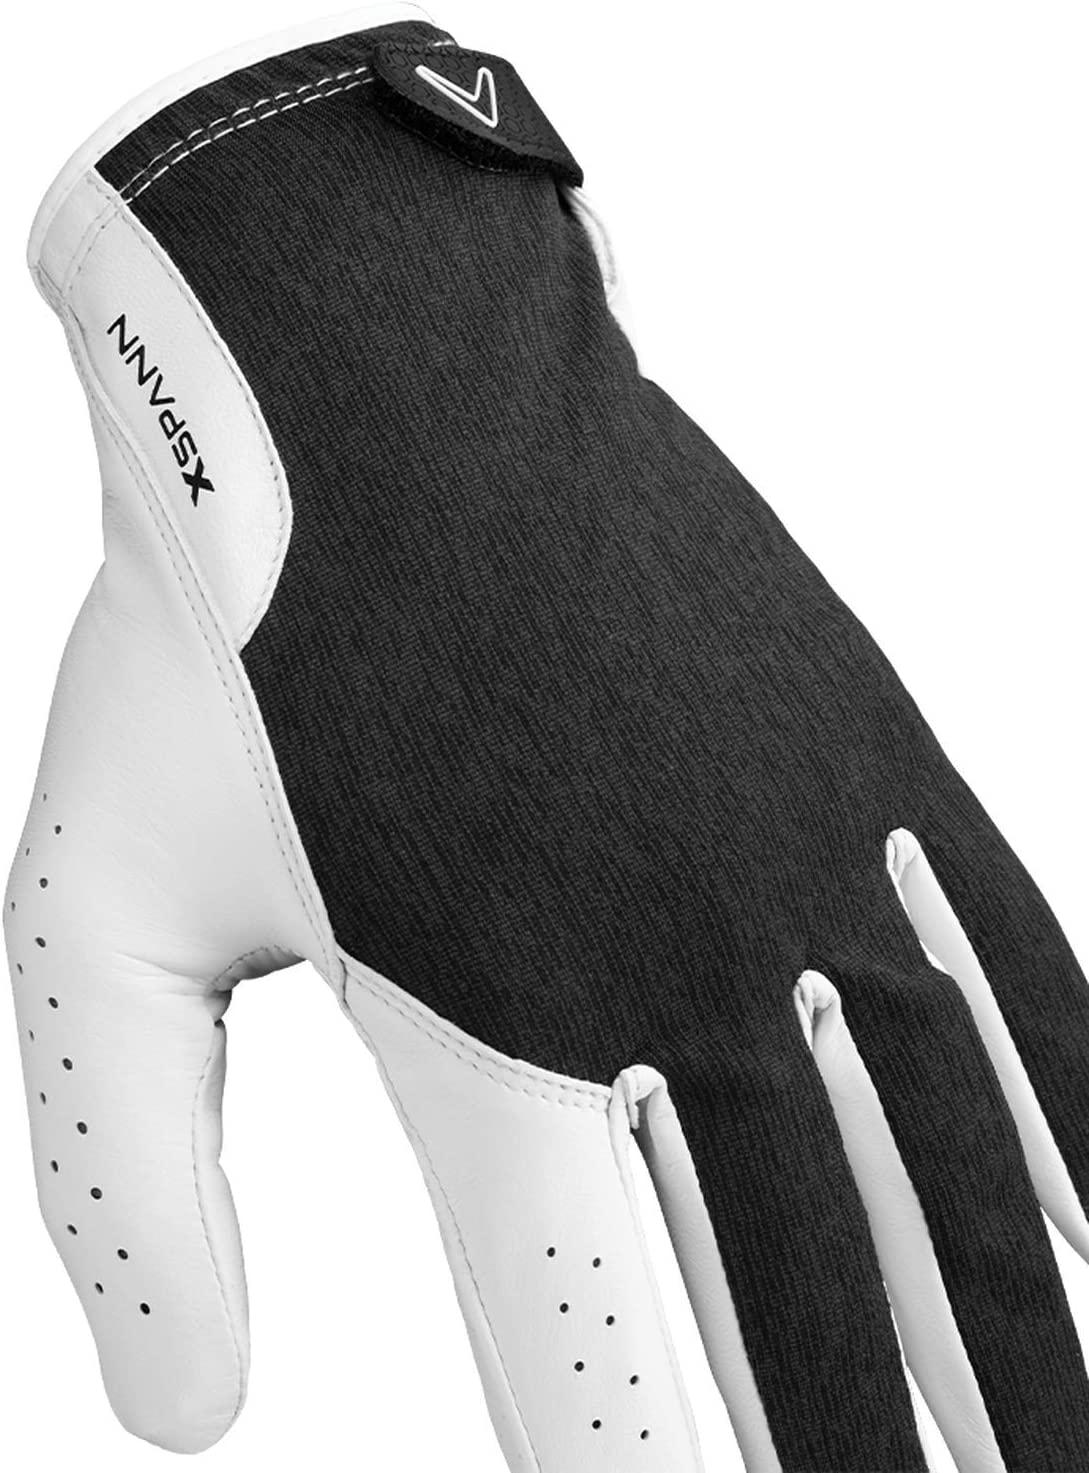 Callaway Golf Men's X-Spann Compression Fit Premium Cabretta Leather Golf  Glove White/Black X-Large Standard Worn on Left Hand